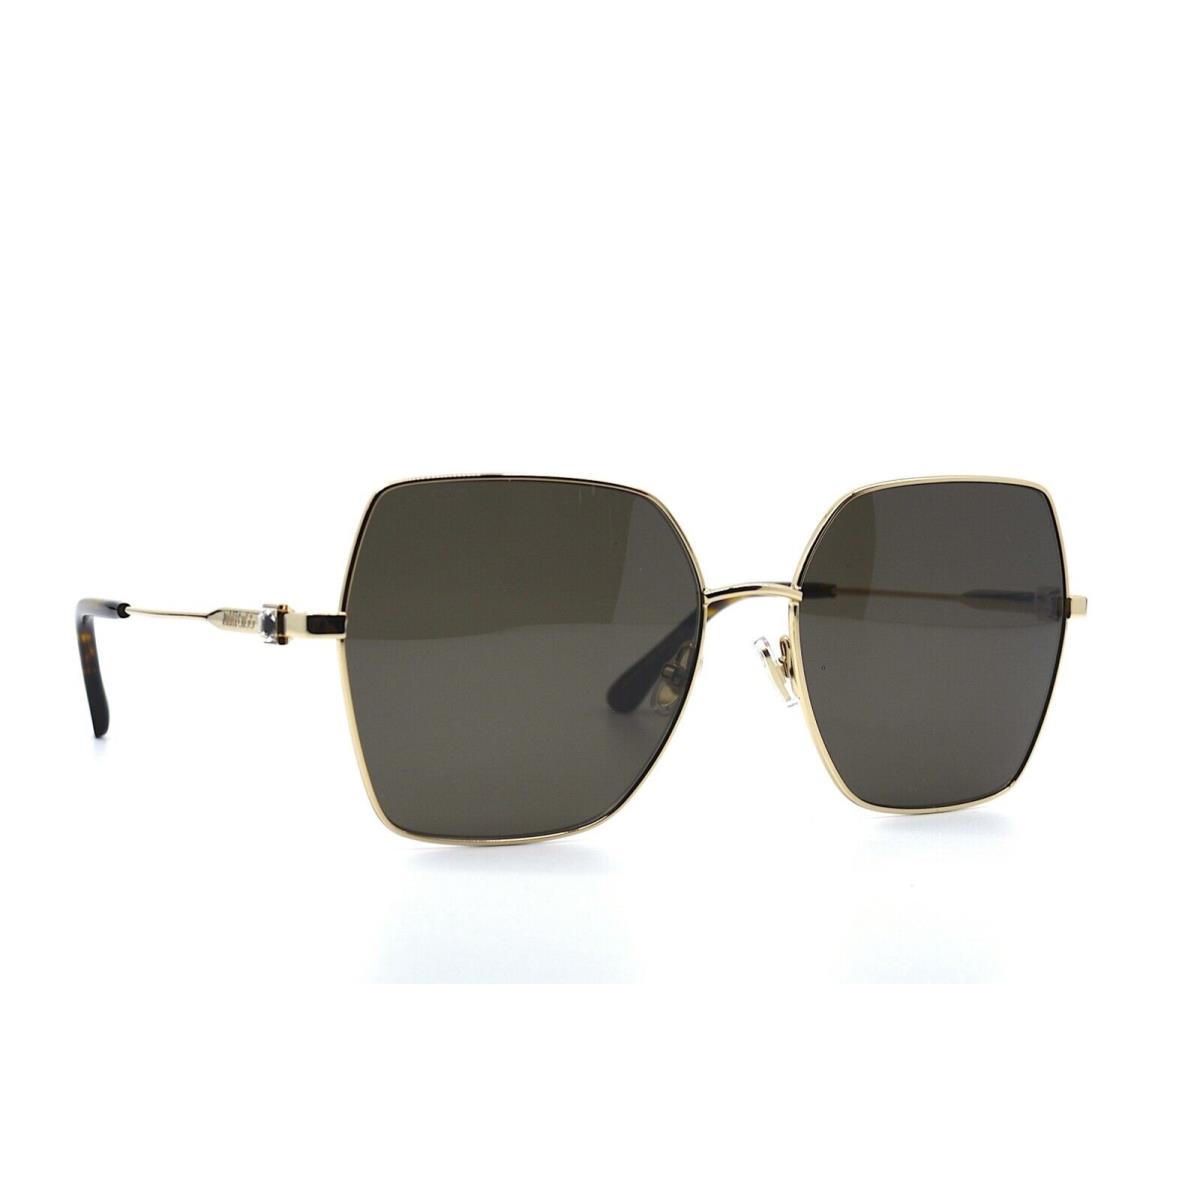 Jimmy Choo Reyes/s Gold Brown Sunglasses 59-17